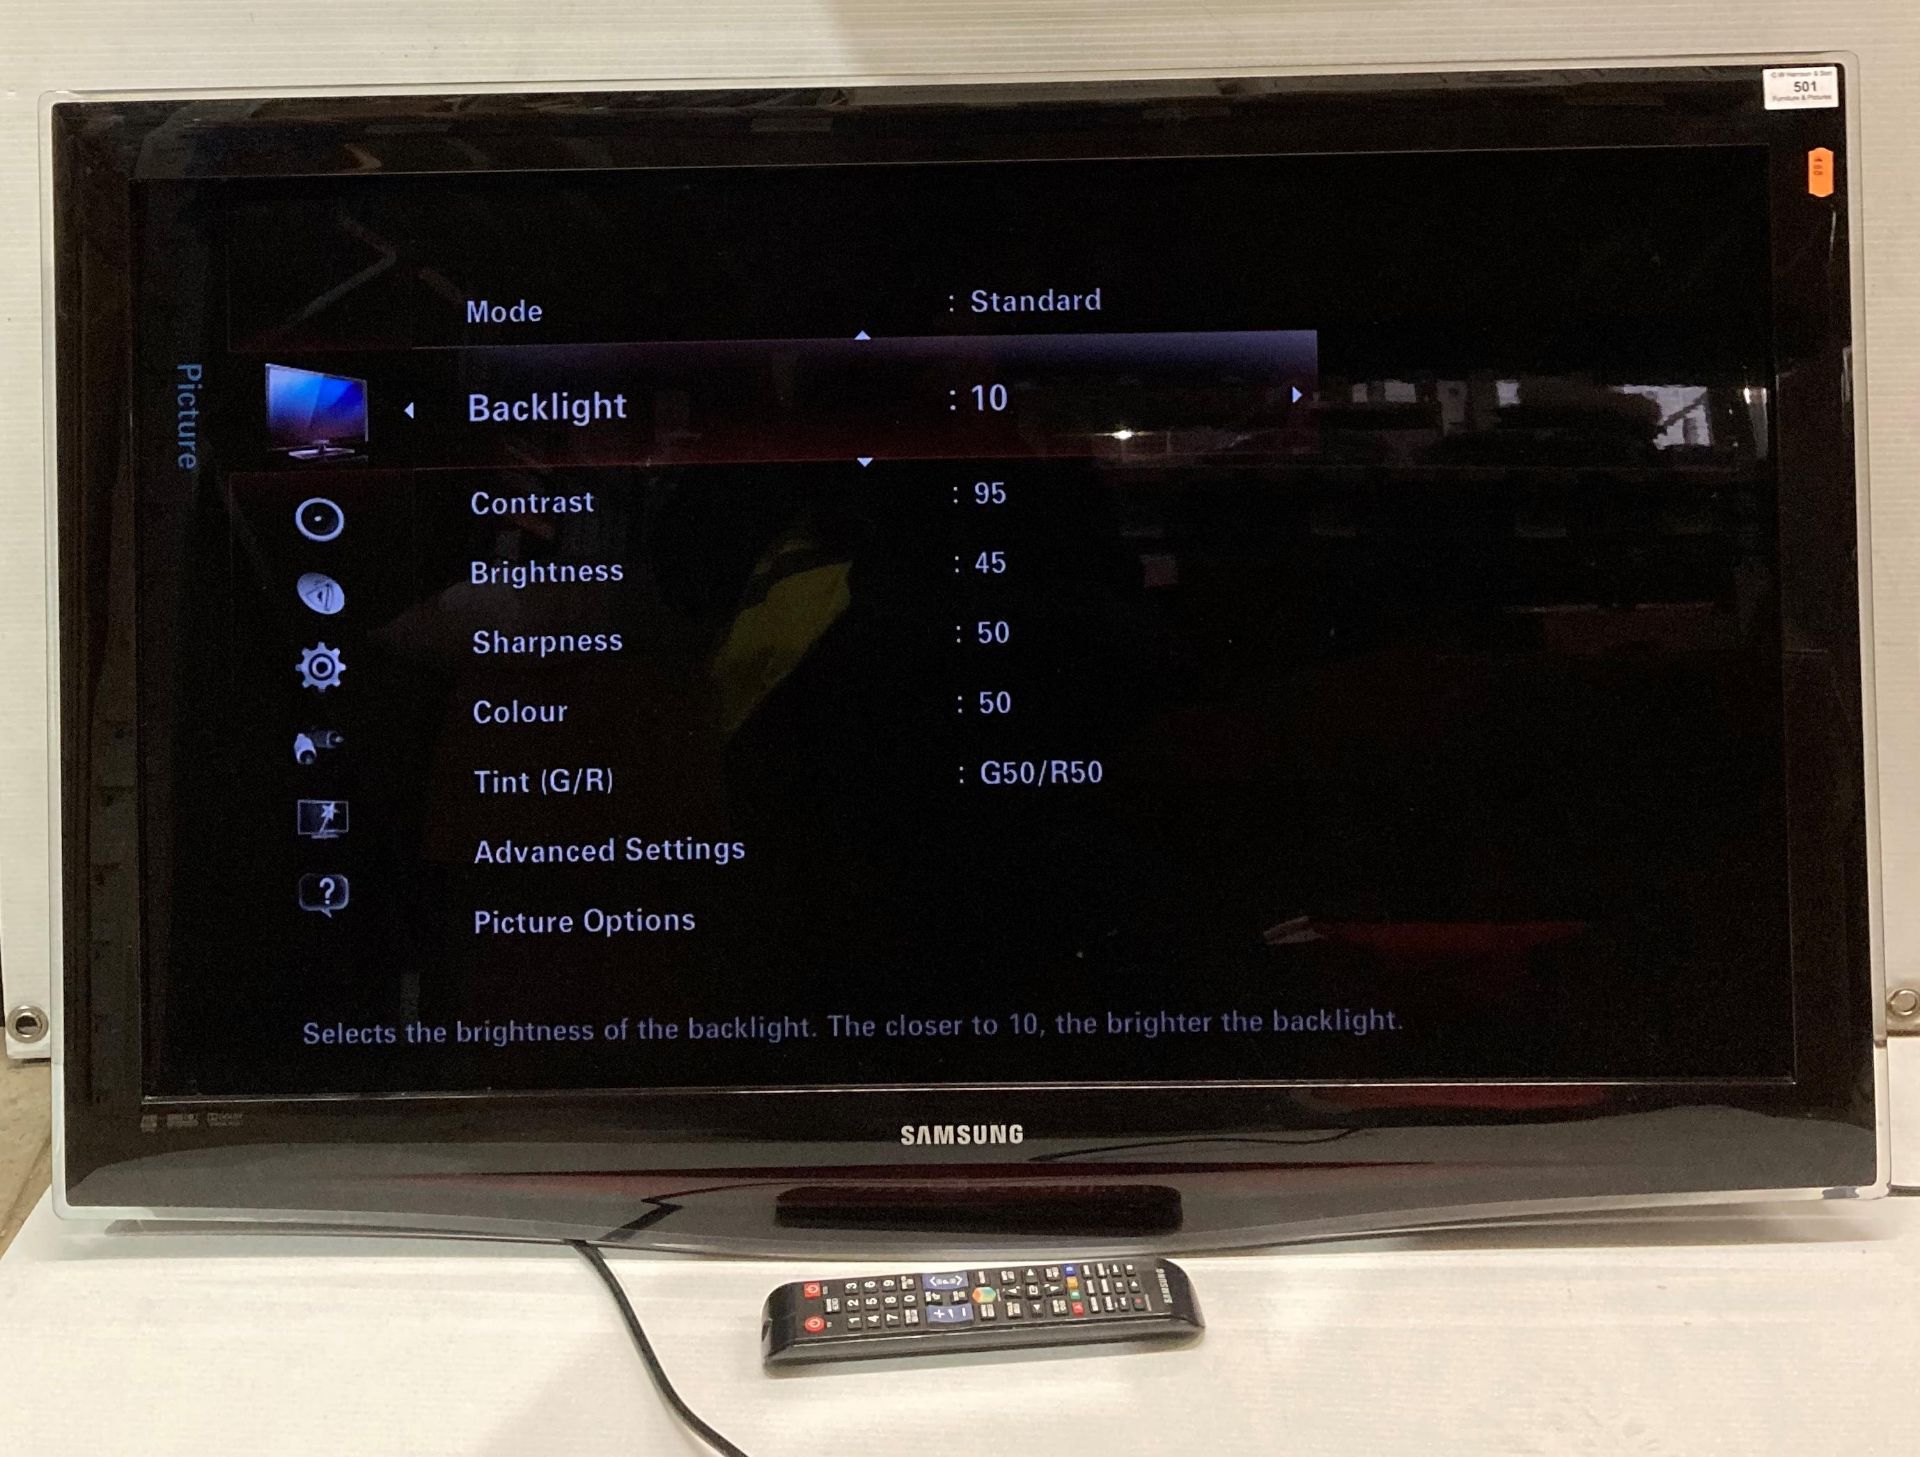 Samsung 40" LCD TV,